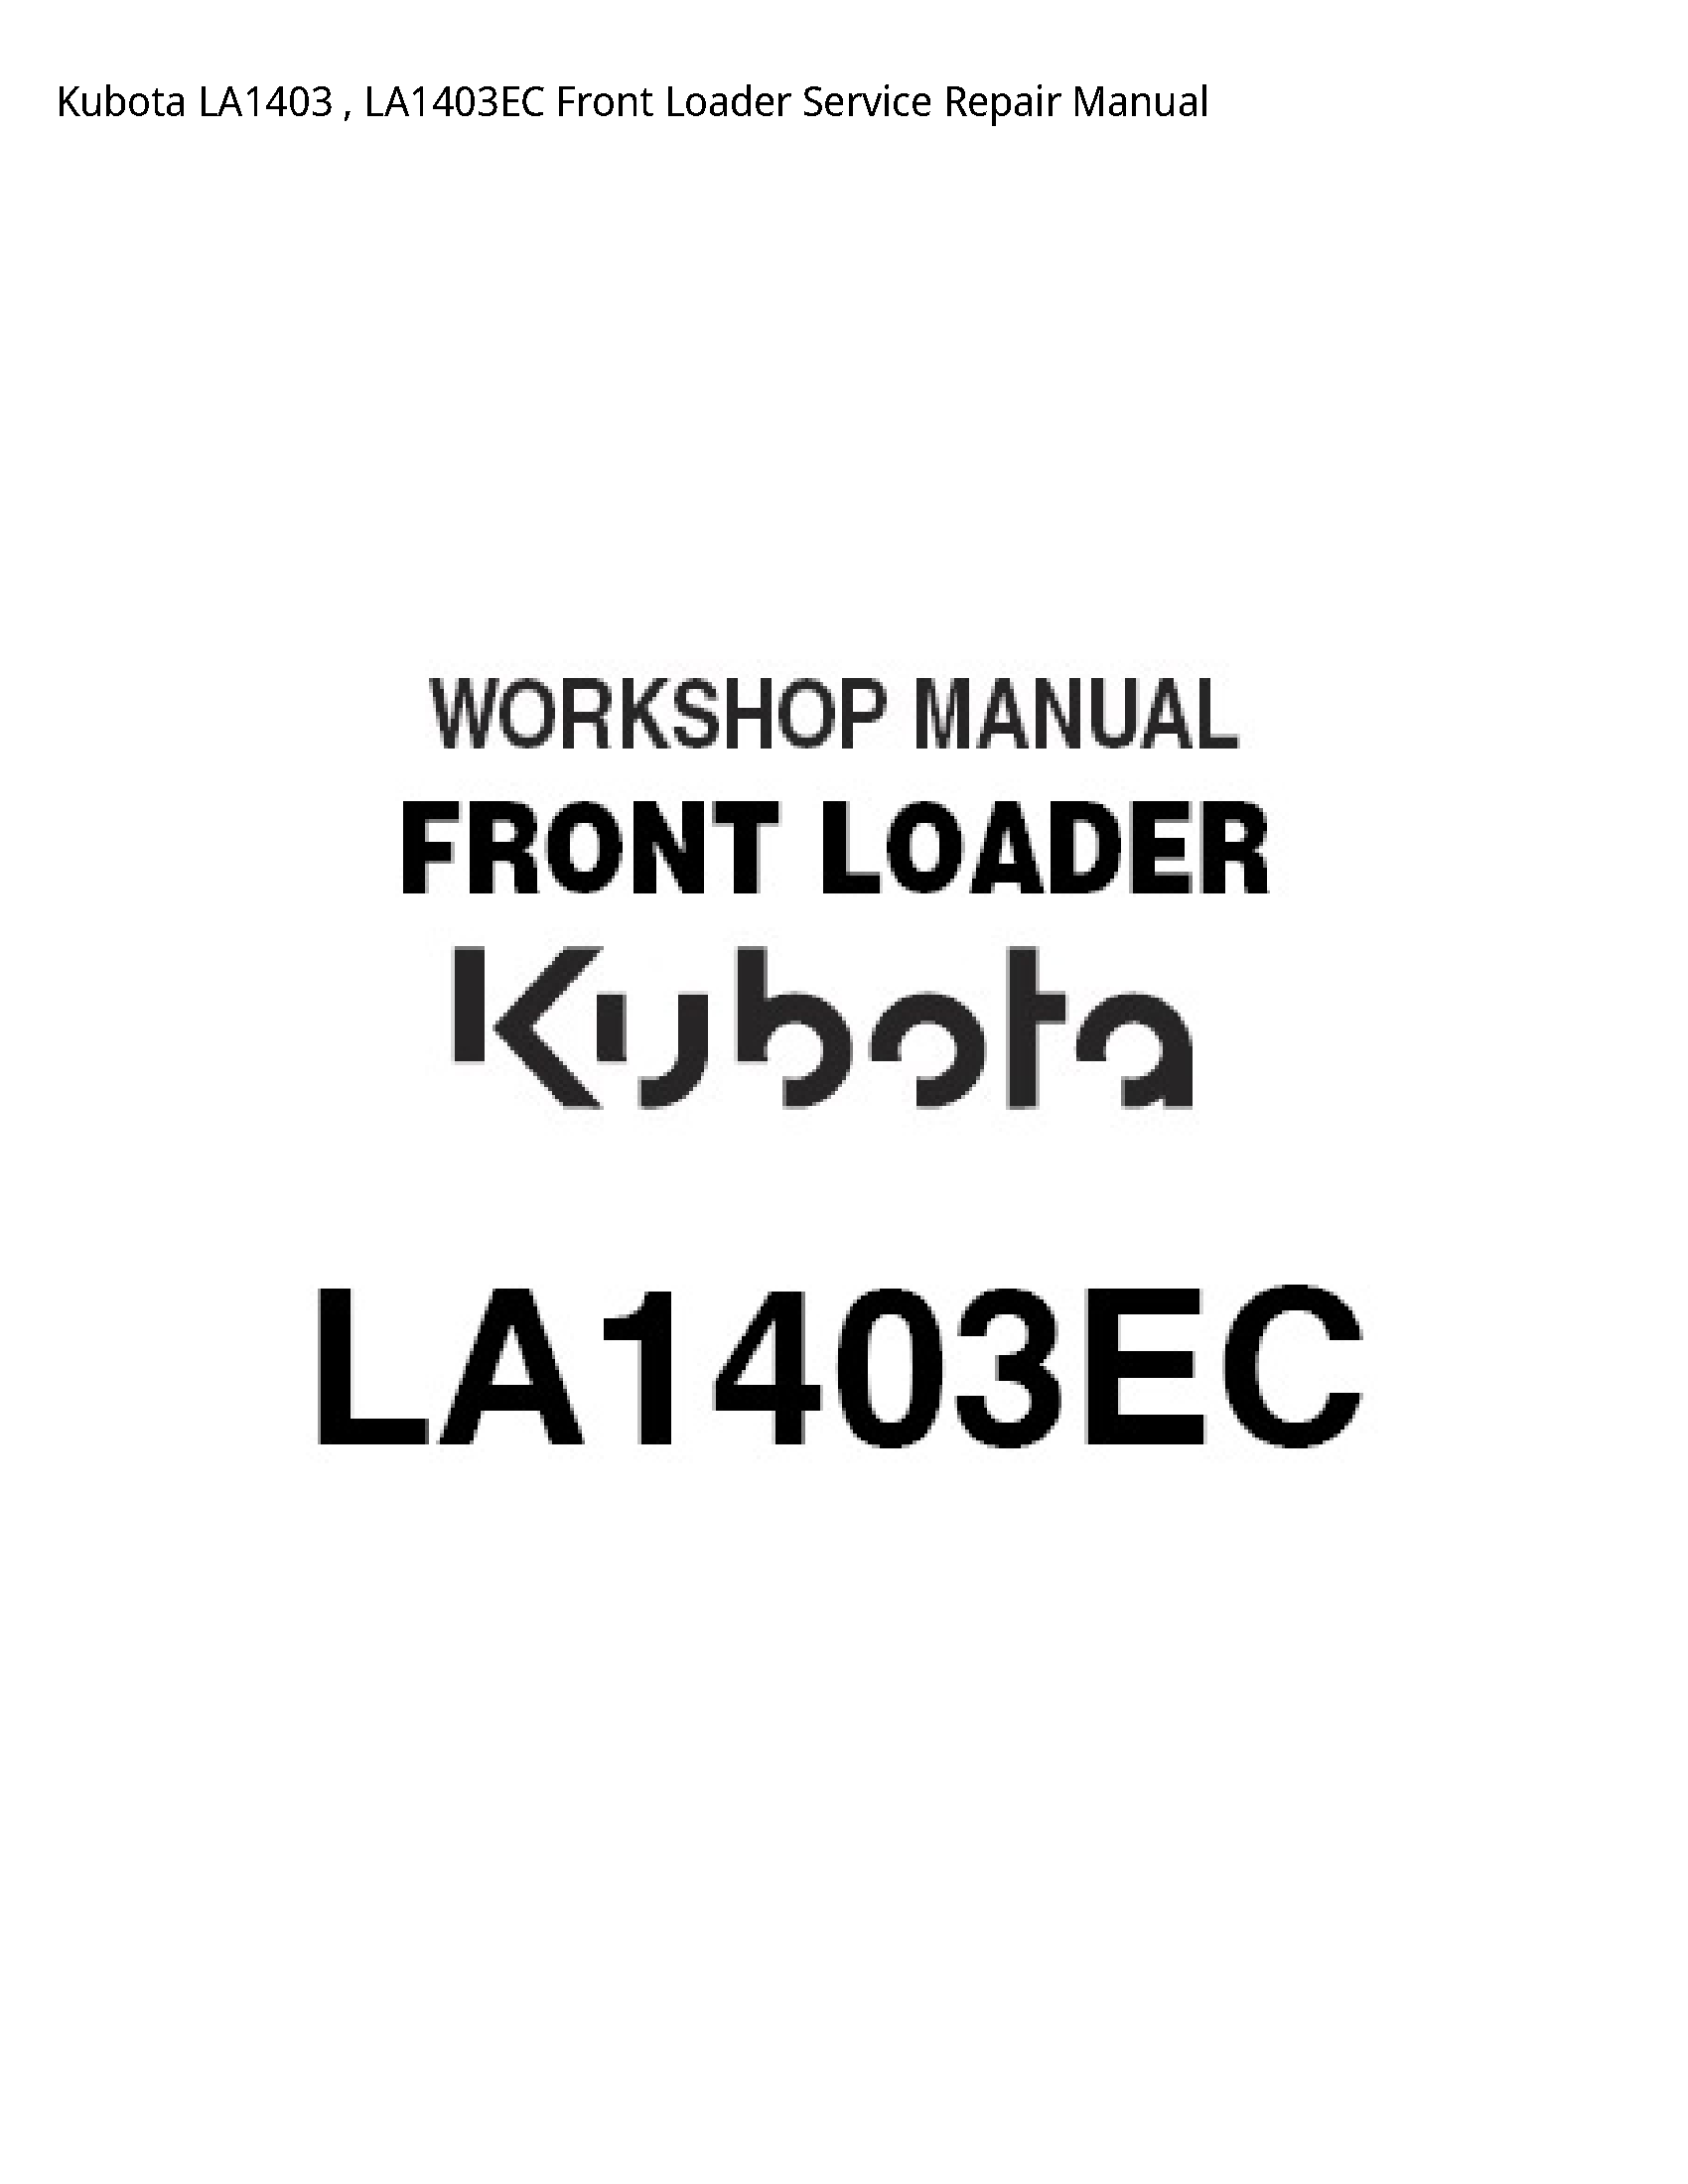 Kubota LA1403 Front Loader manual